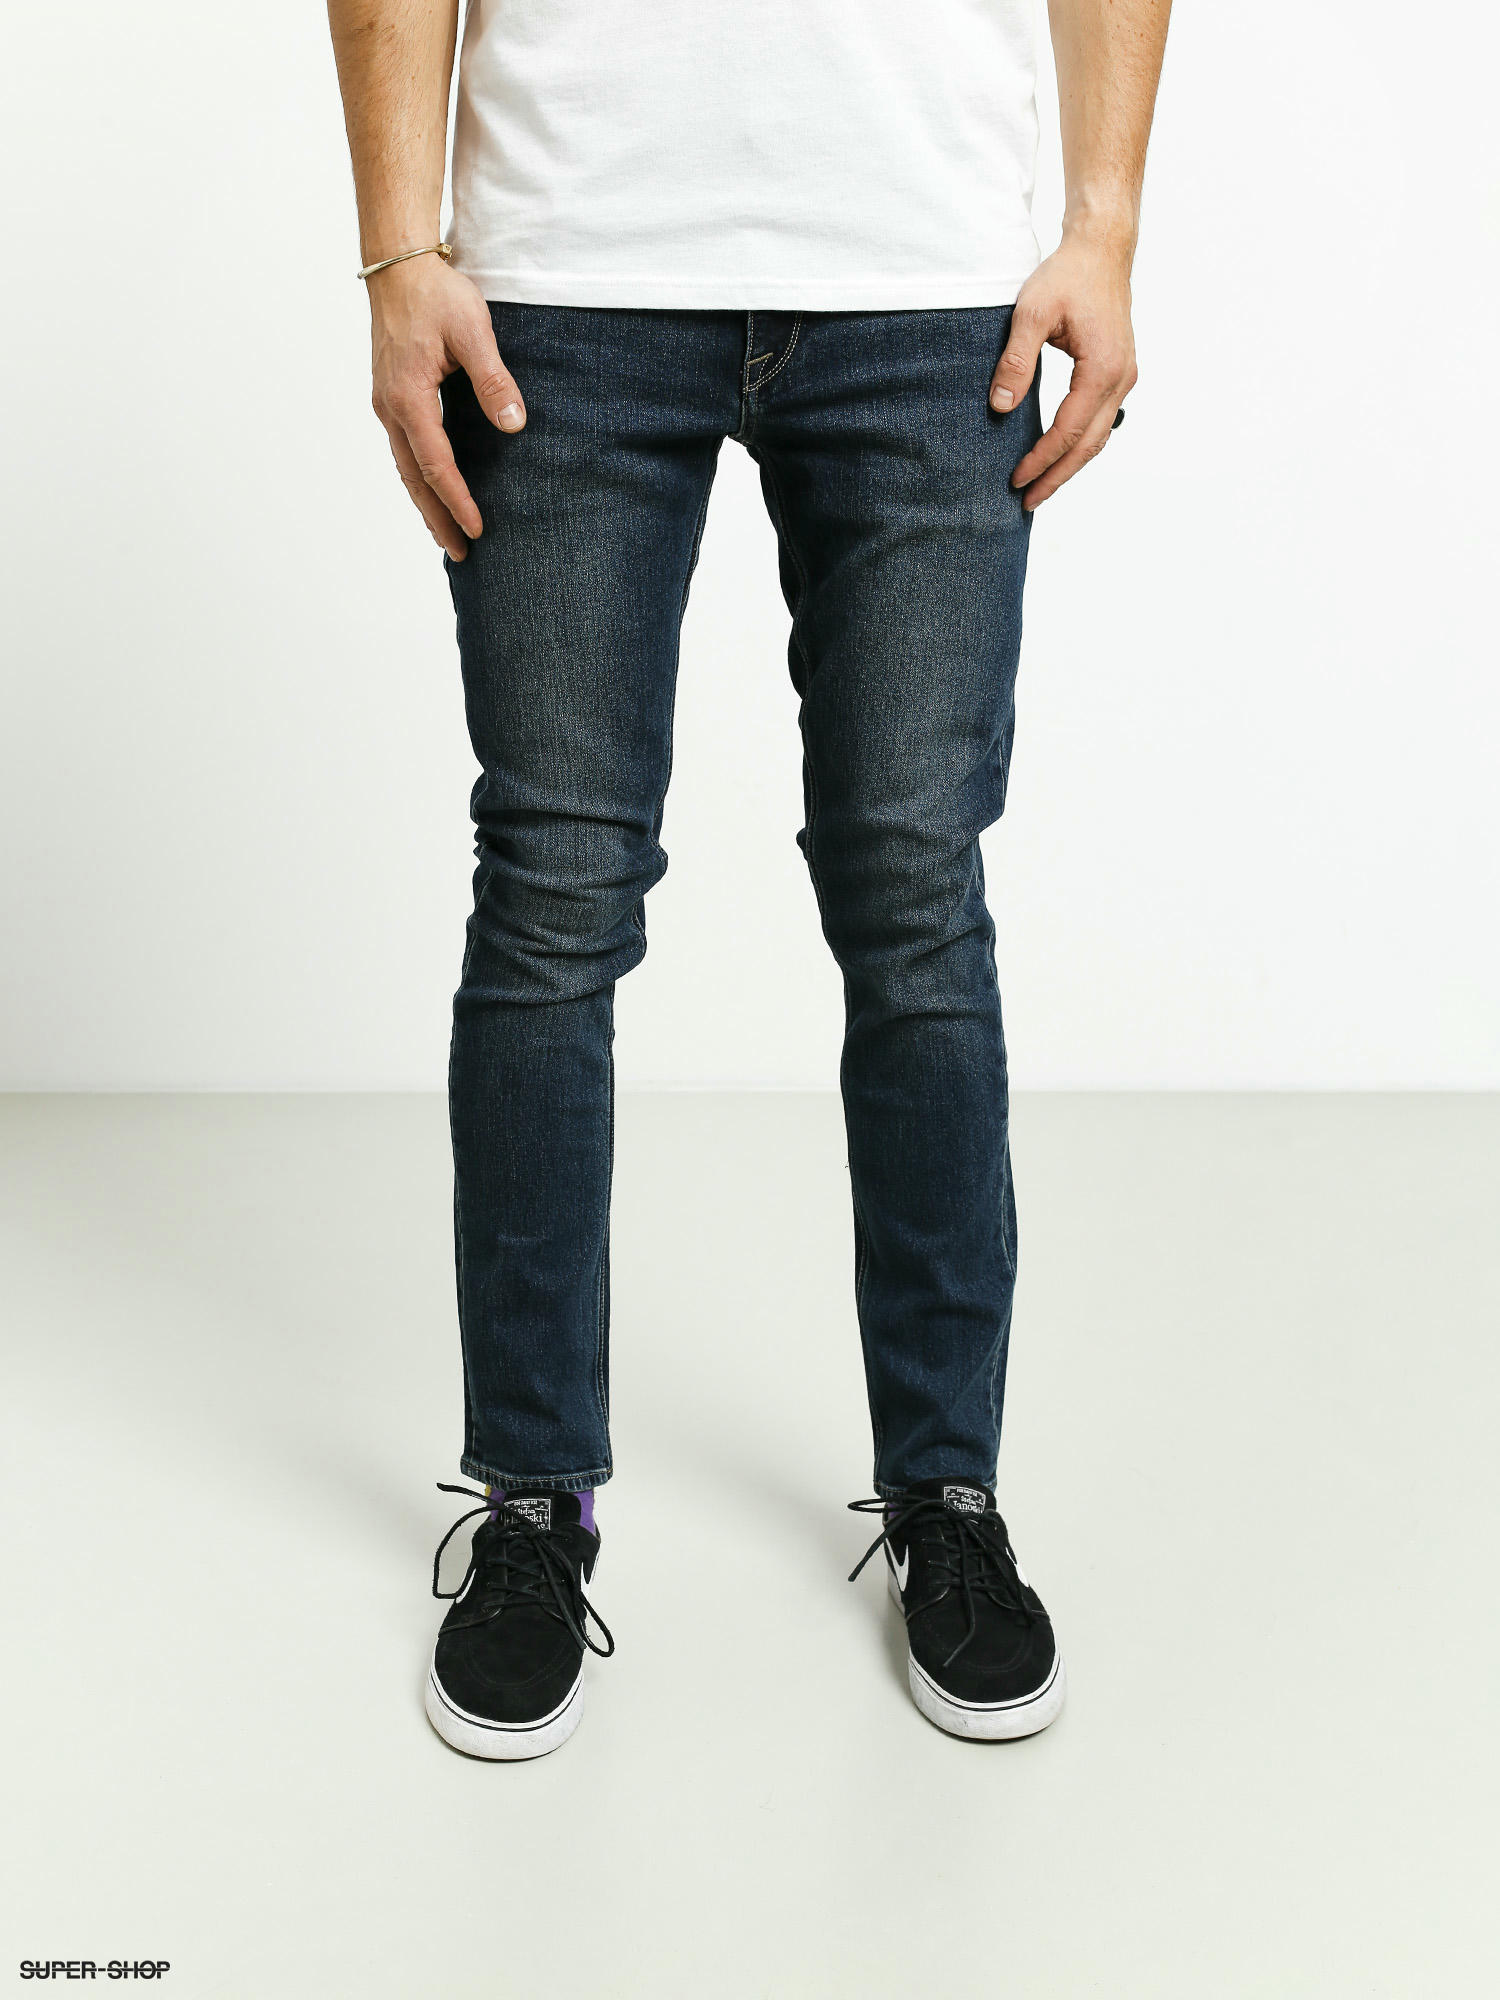 volcom 2x4 jeans